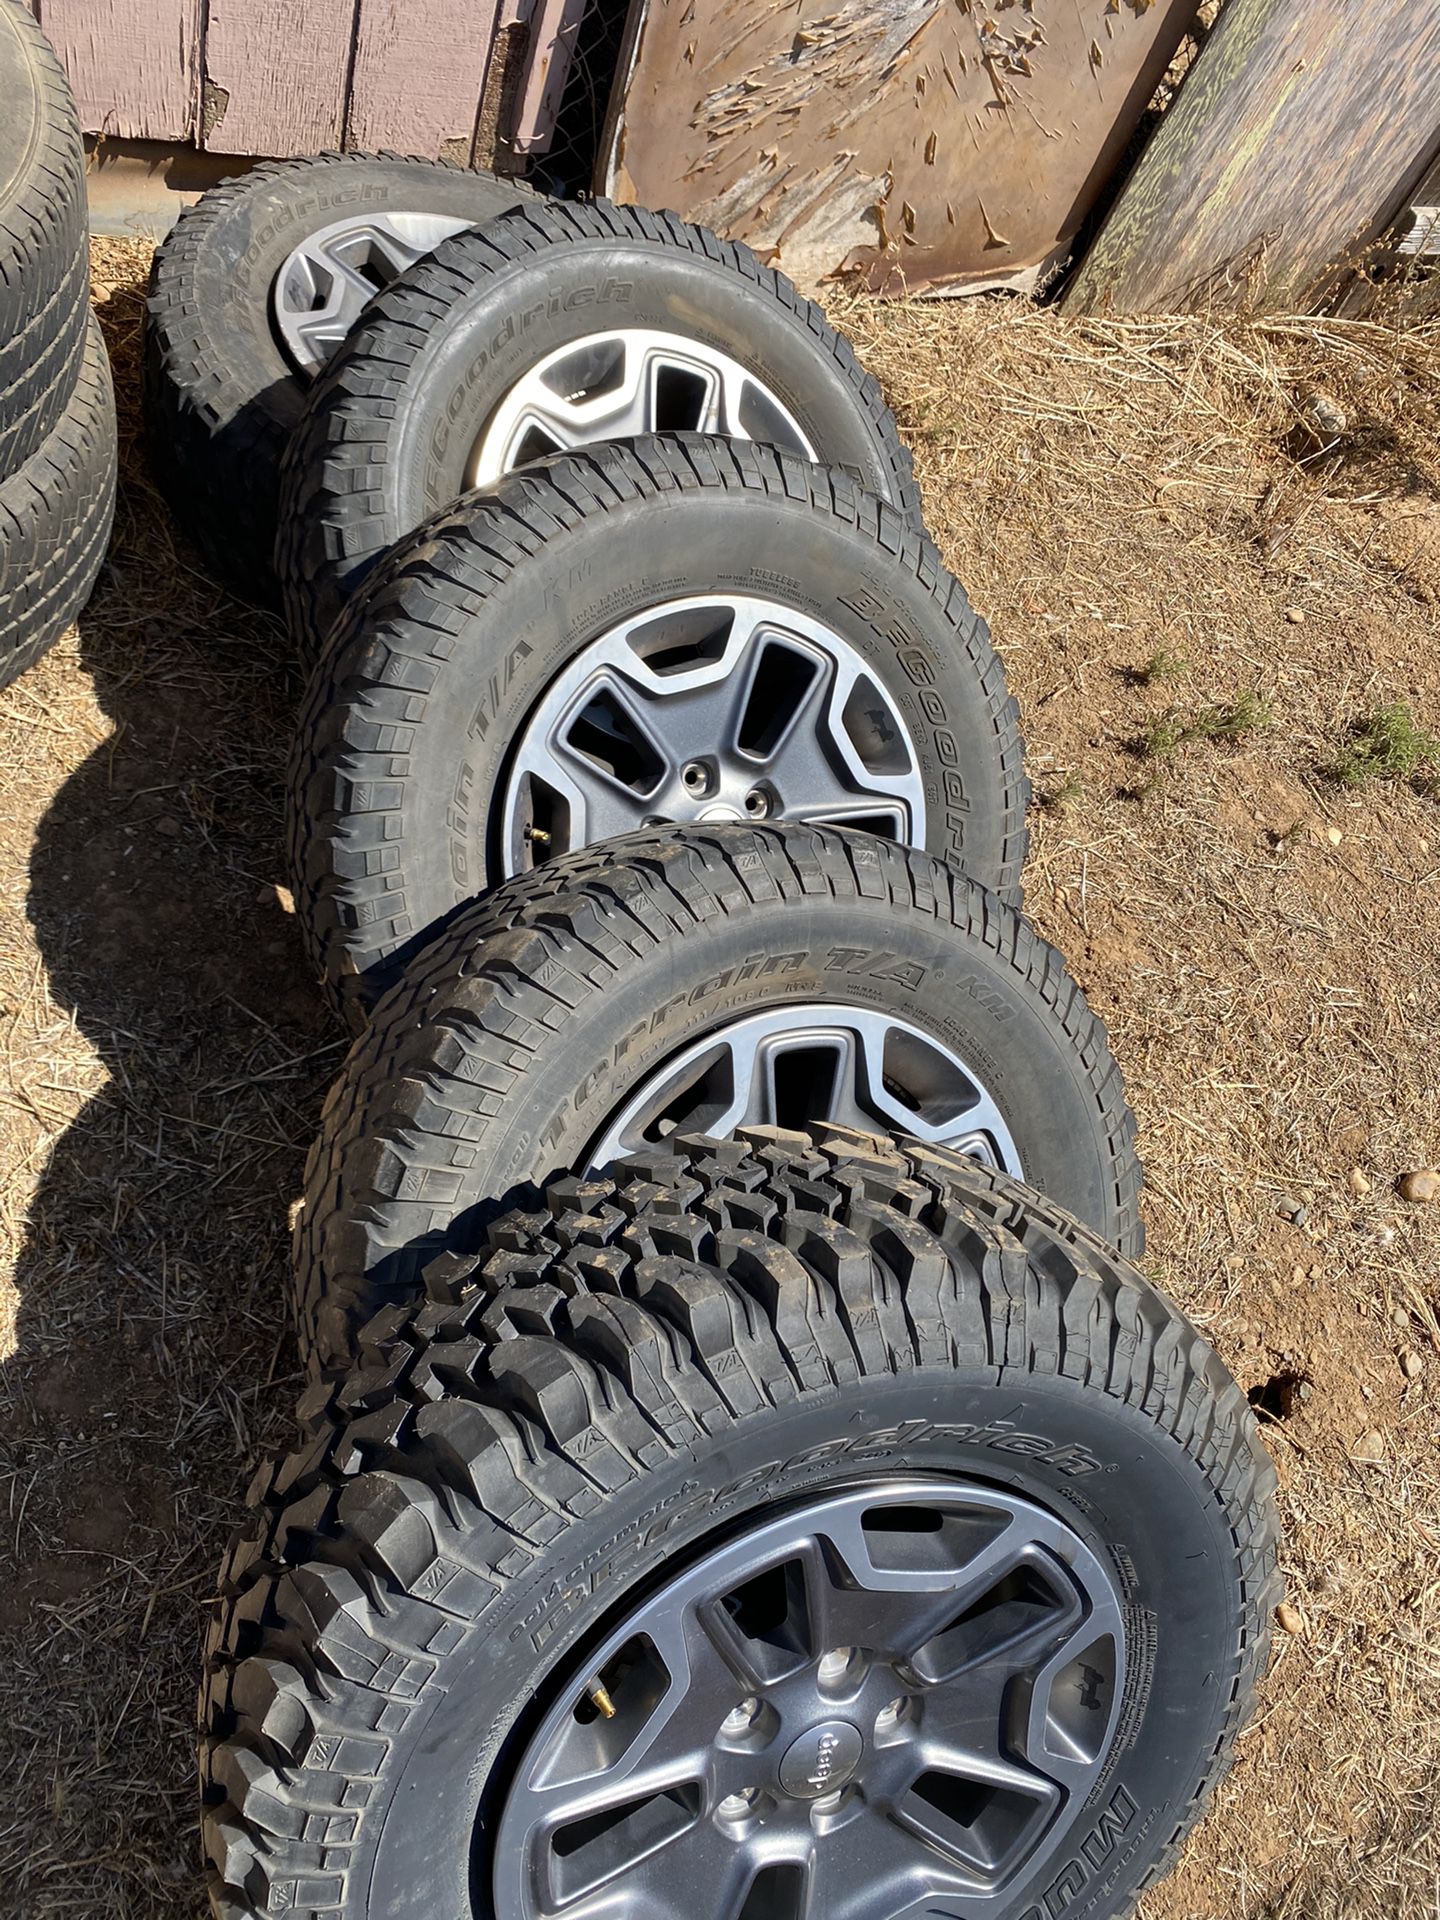 2017 Jeep Rubicon OEM wheels